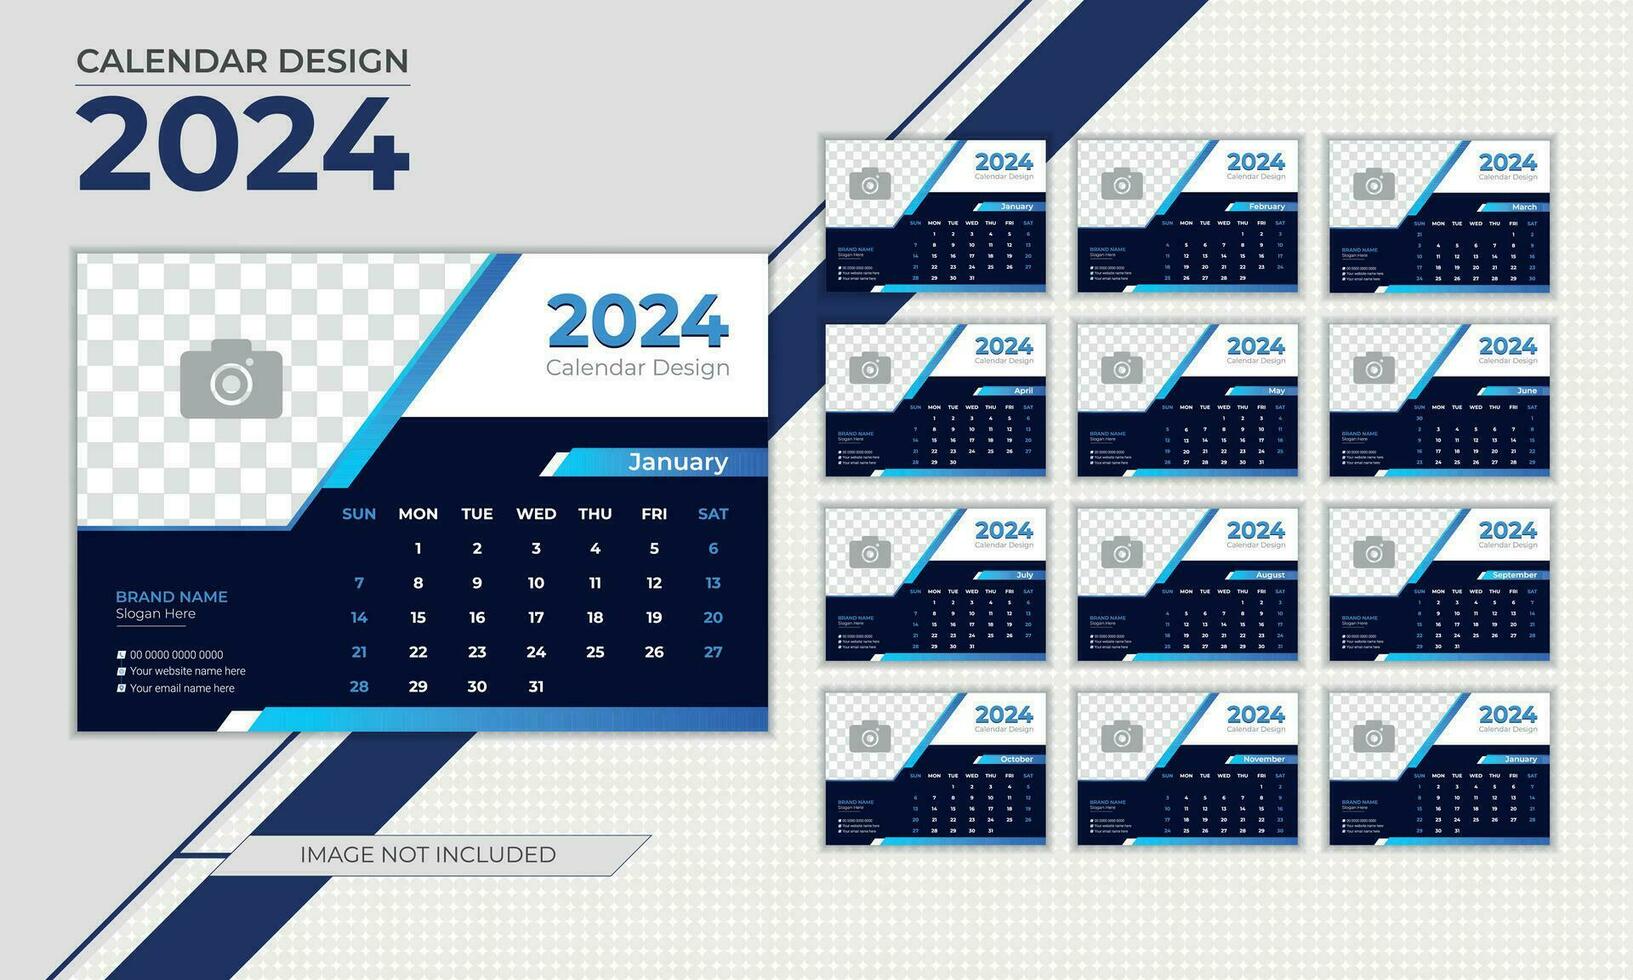 Simple and elegant calendar design layout vector